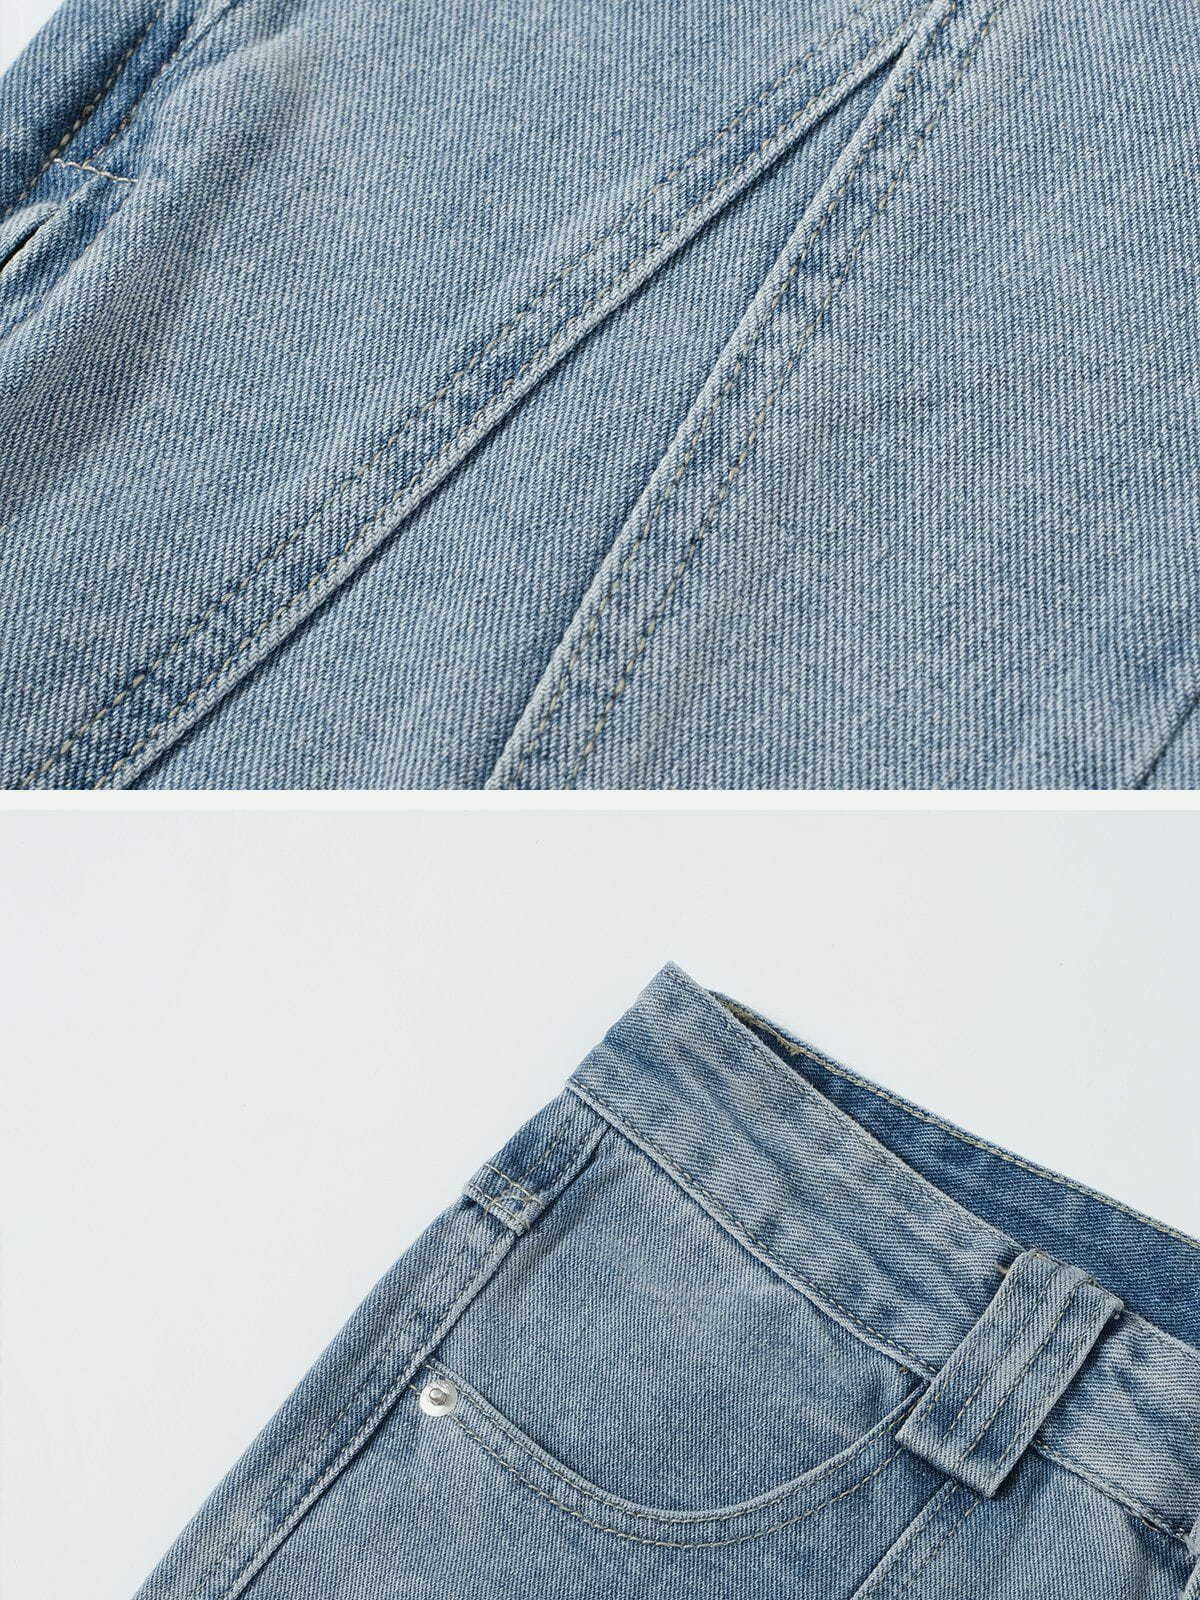 retro split jeans edgy & vintage washed 6247